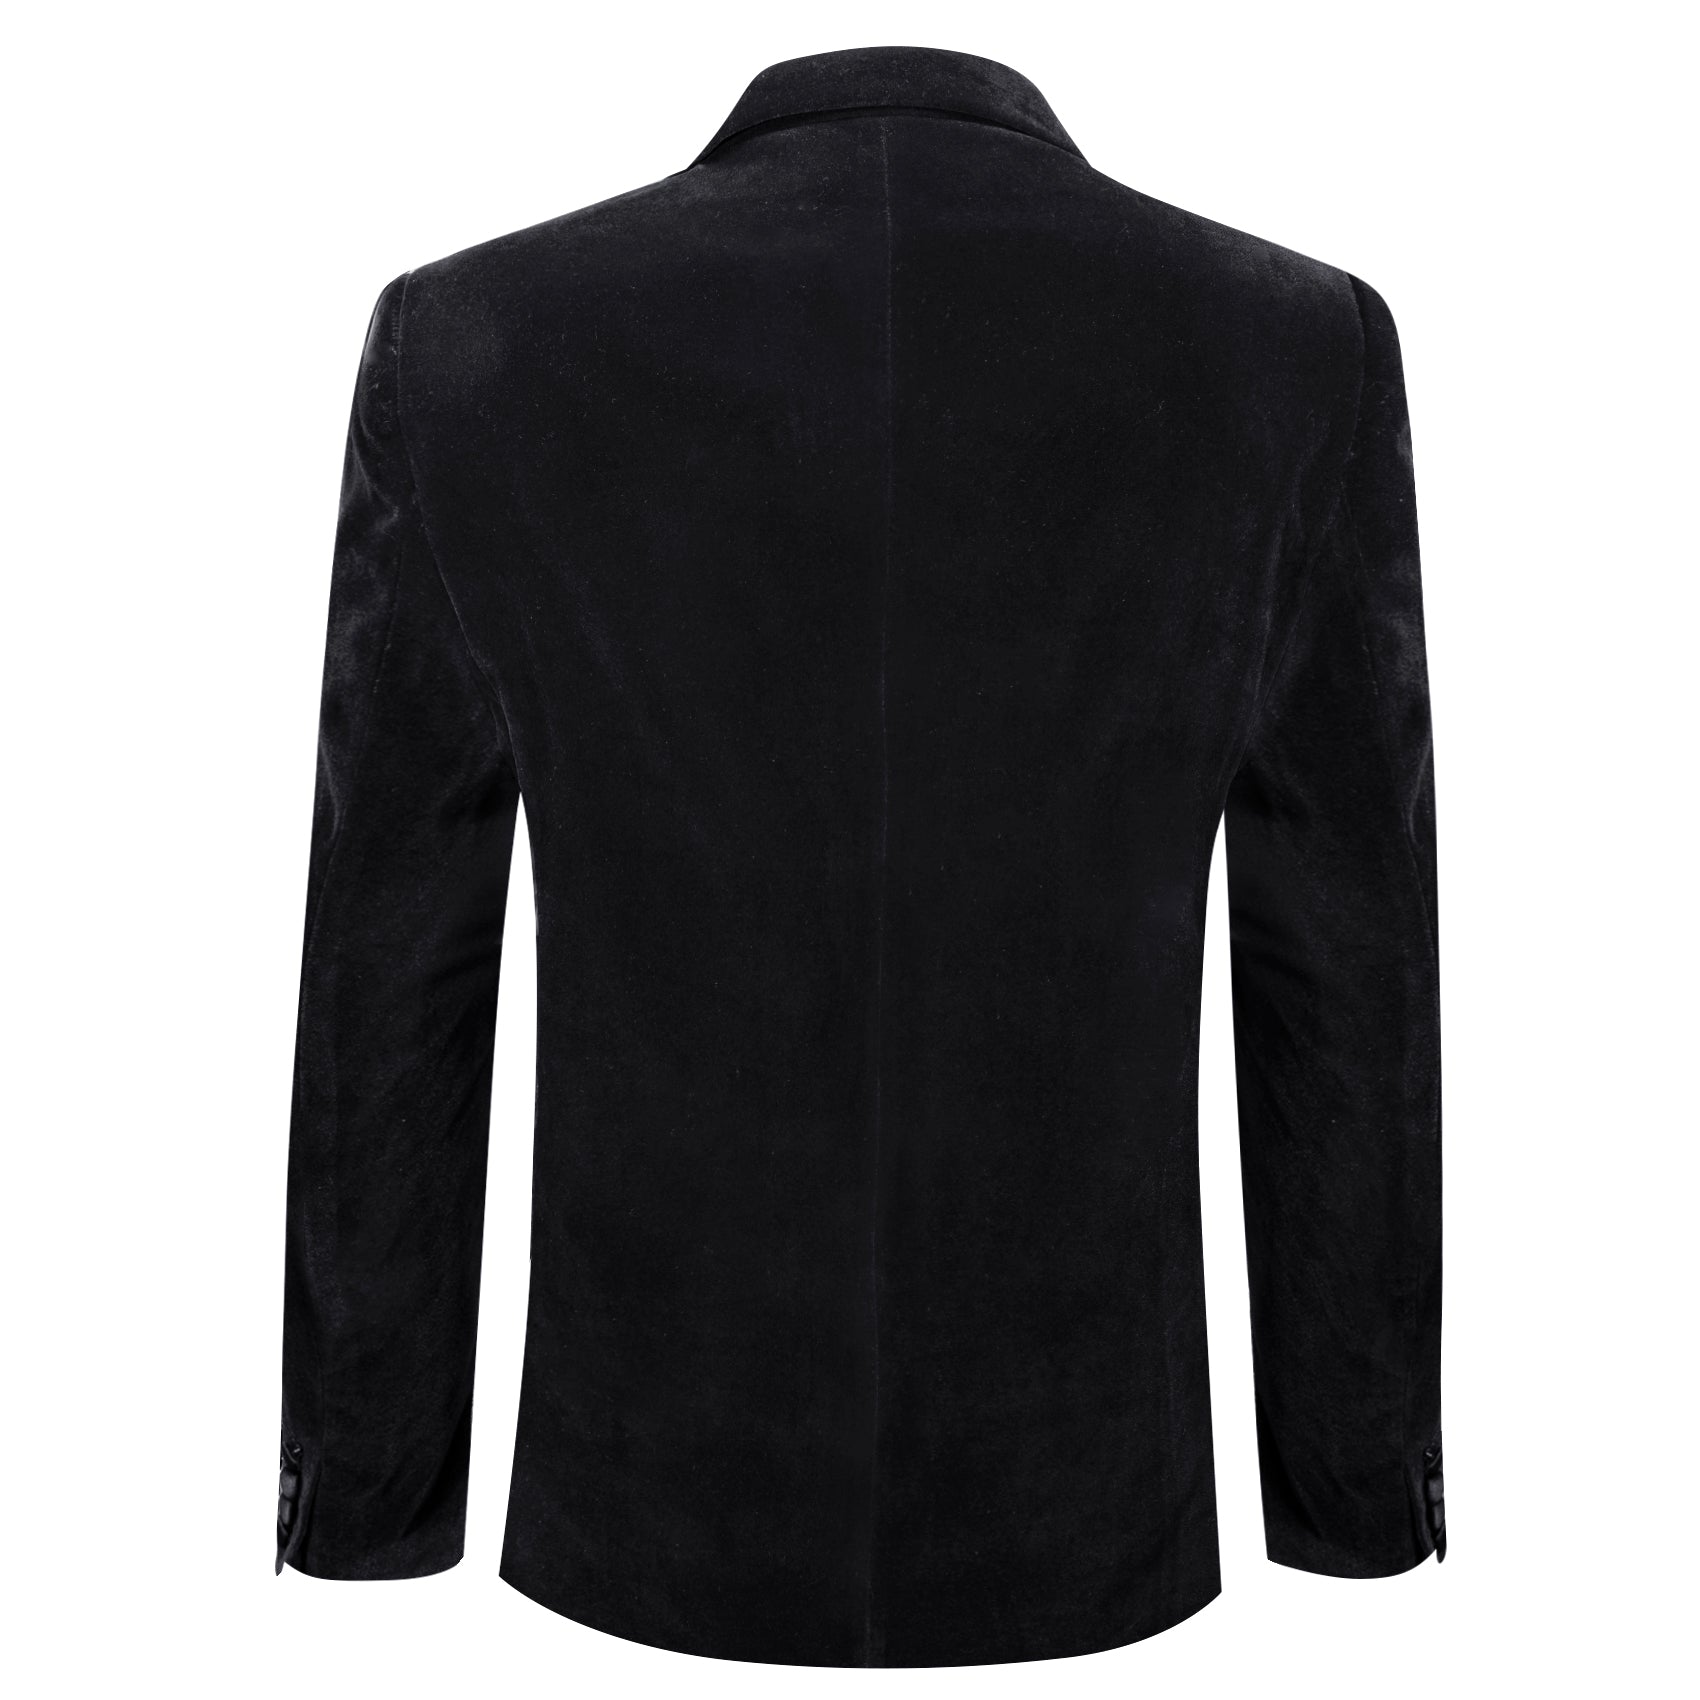 Black velvet suit coat